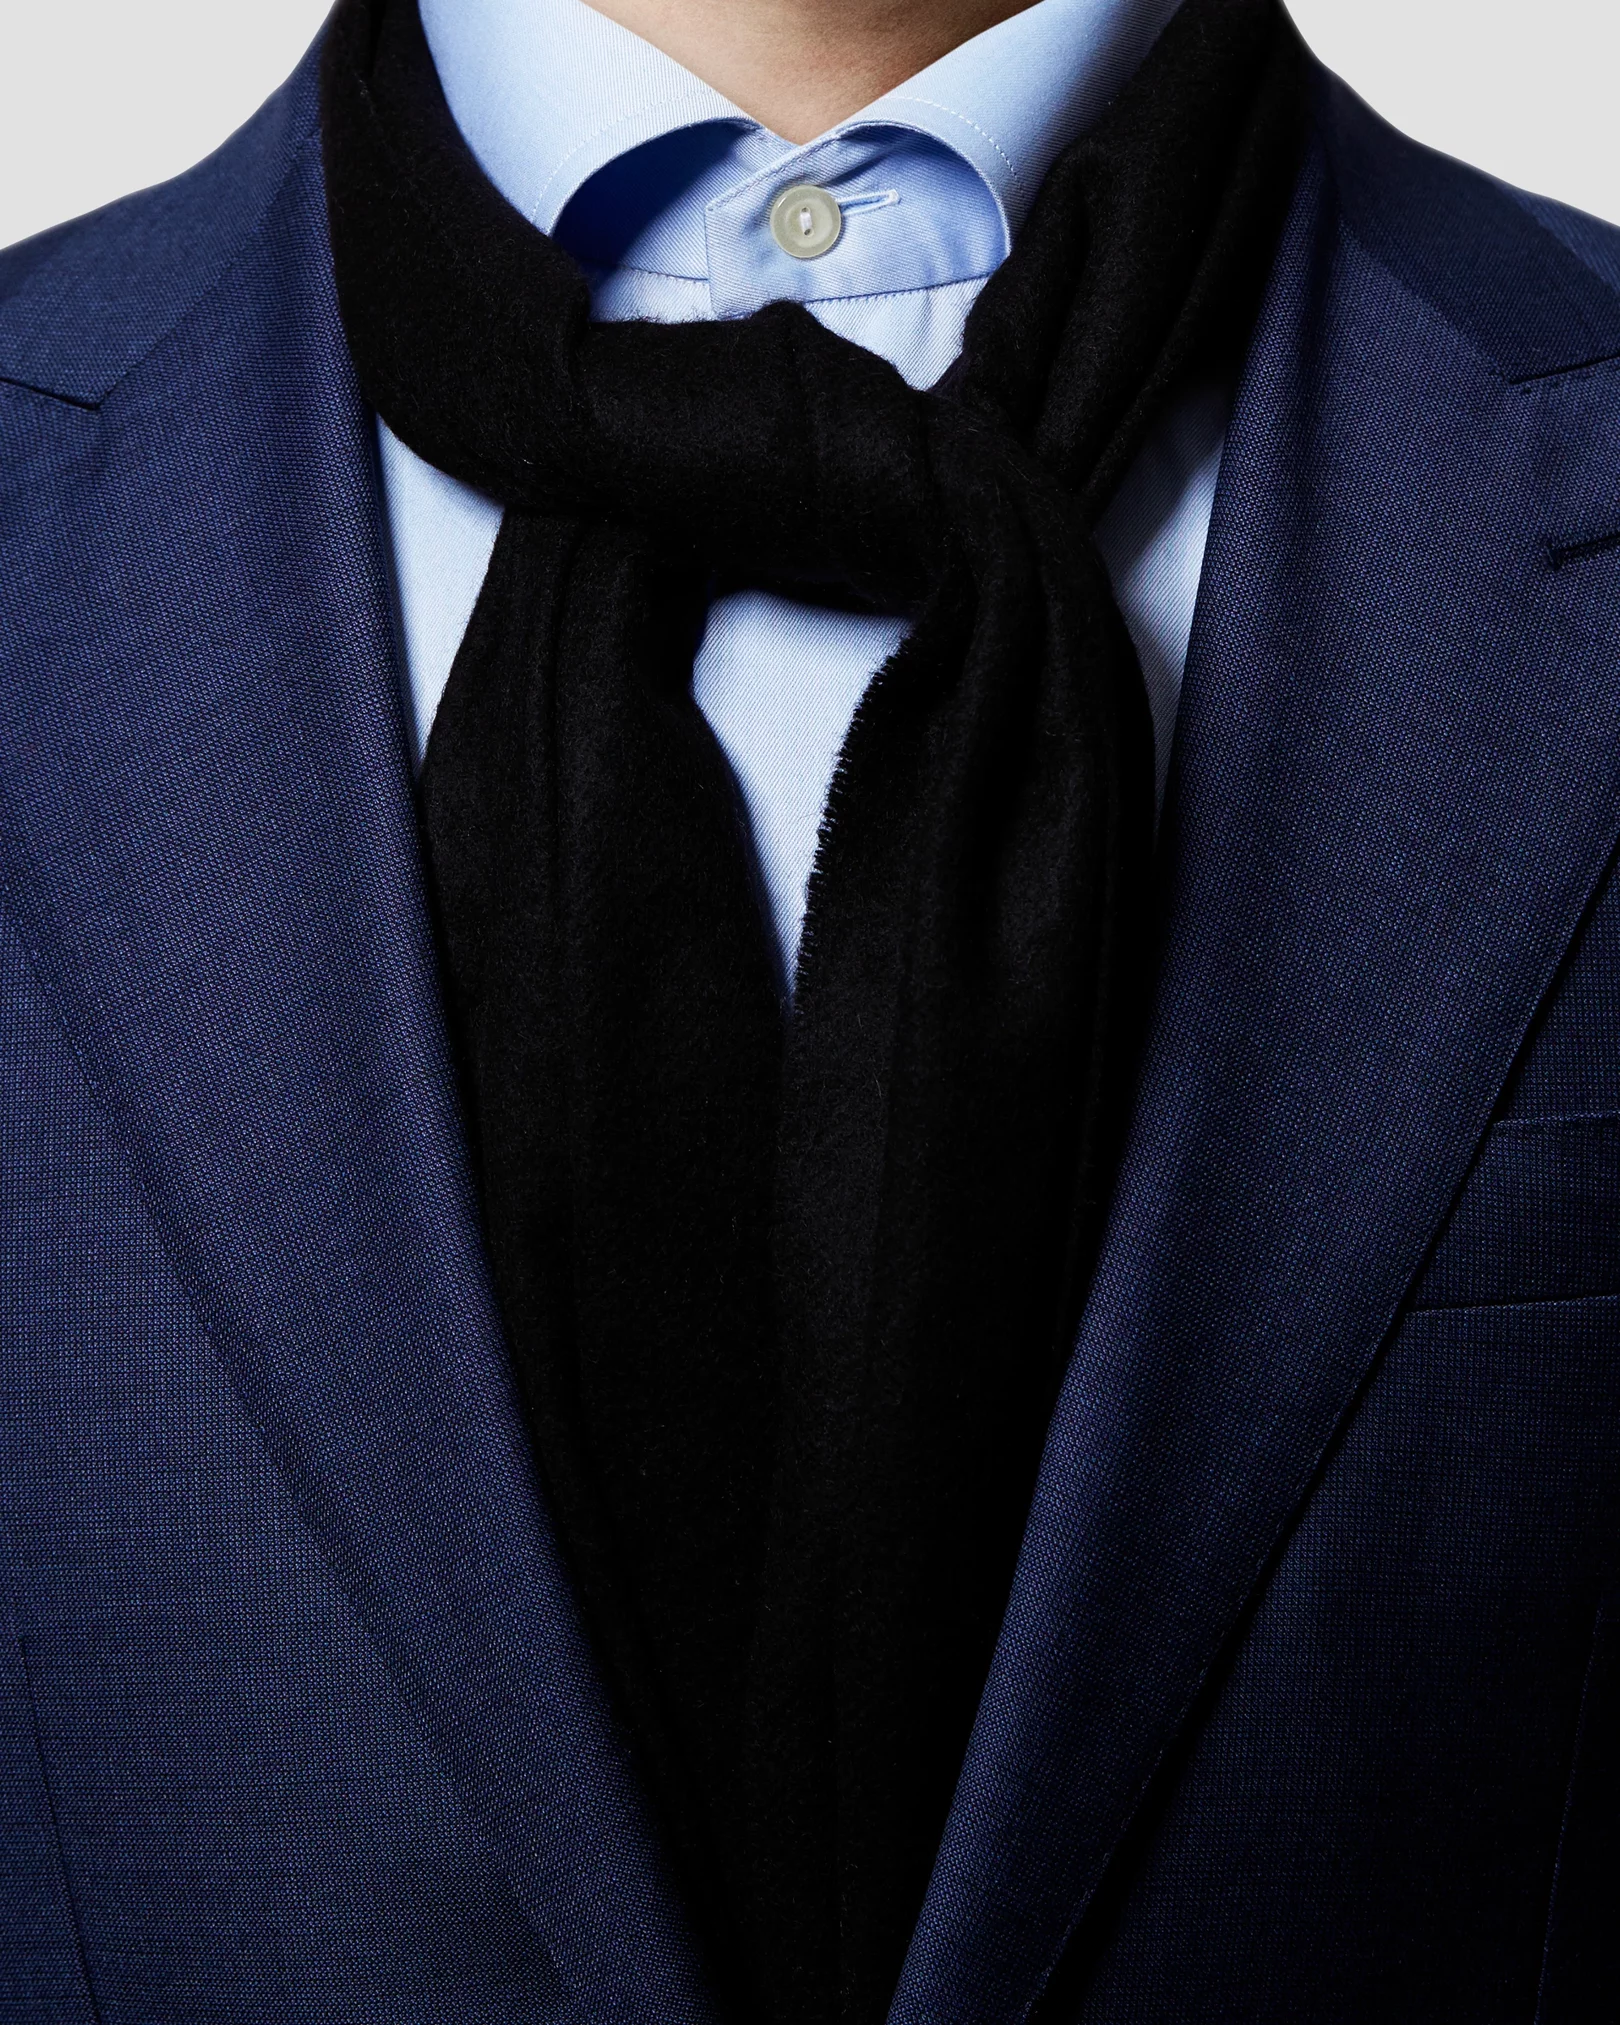 Eton - black cahsmere scarf